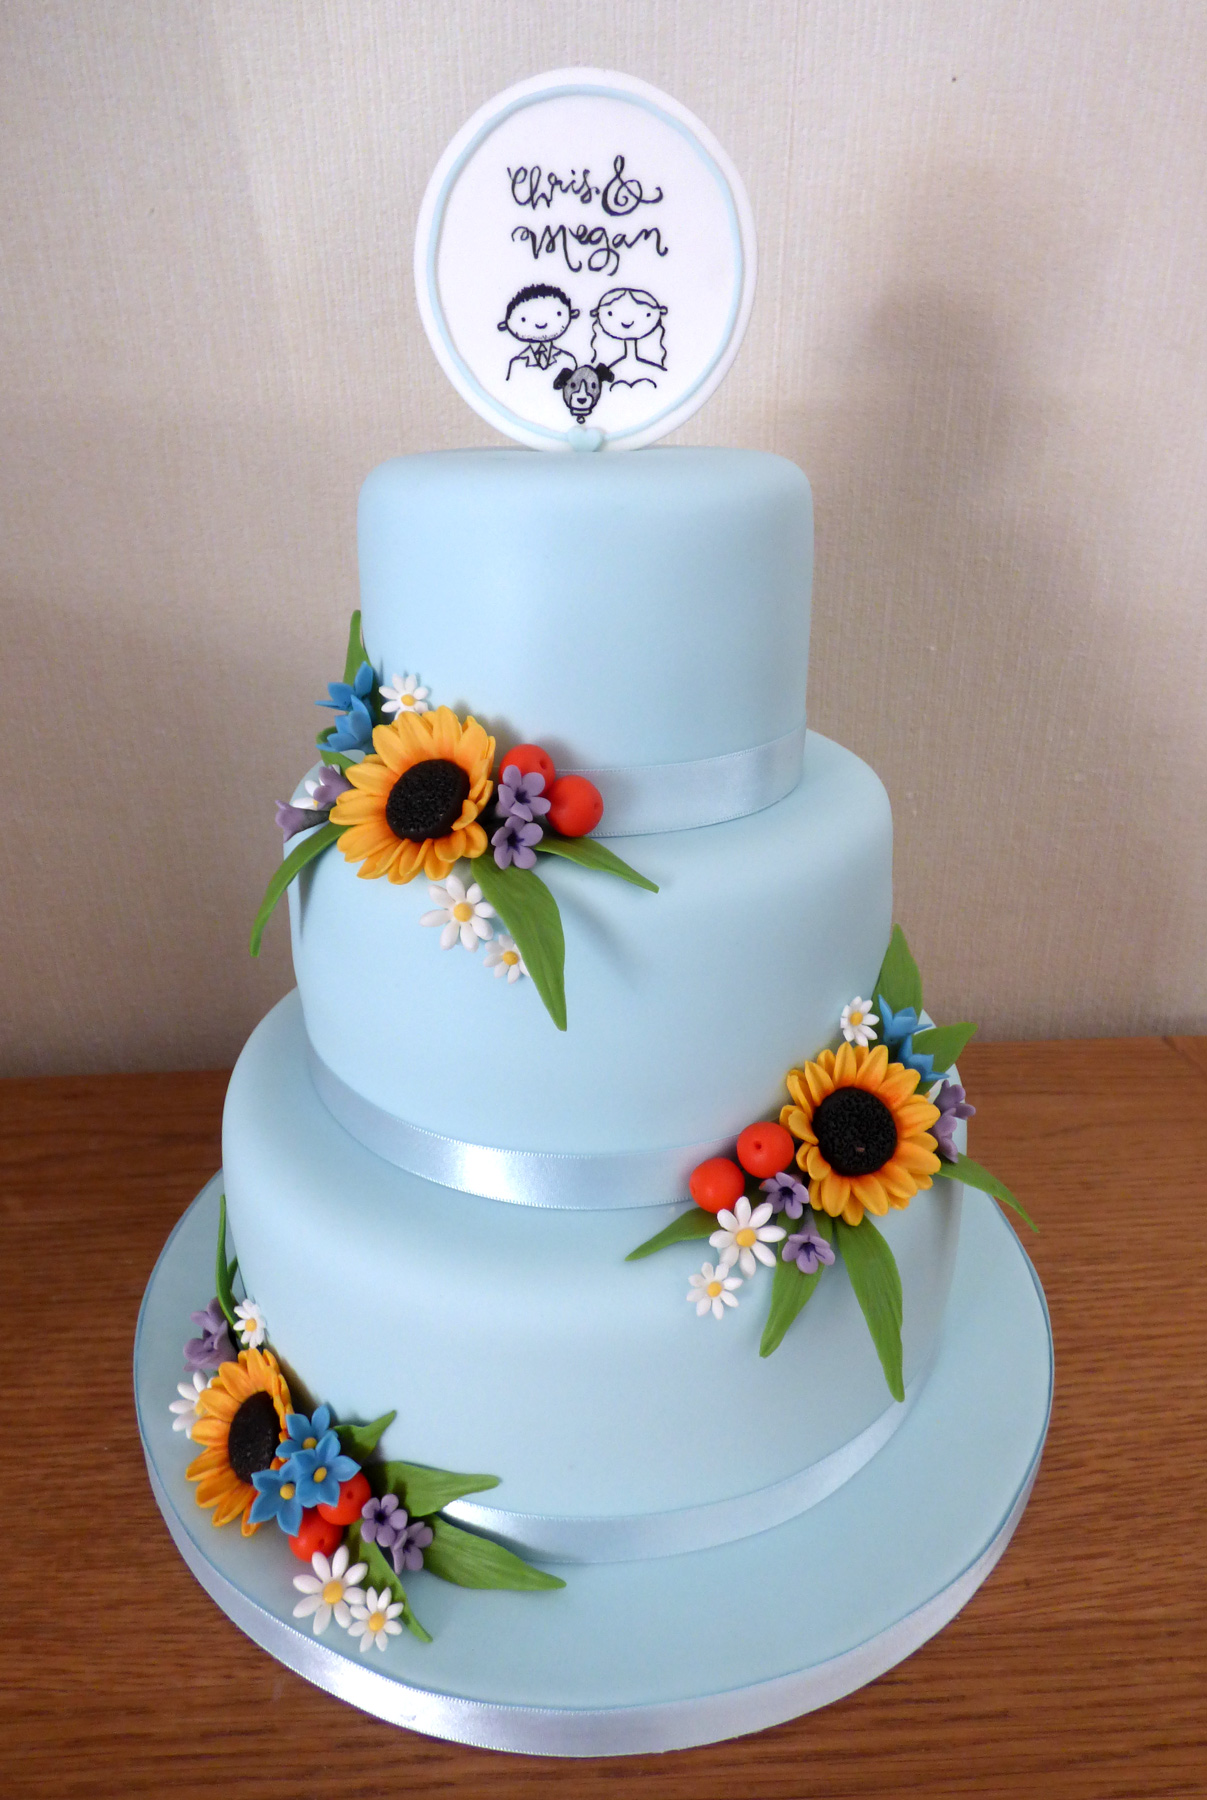 3 Tier Tiffany Inspired Birthday Cake | Susie's Cakes